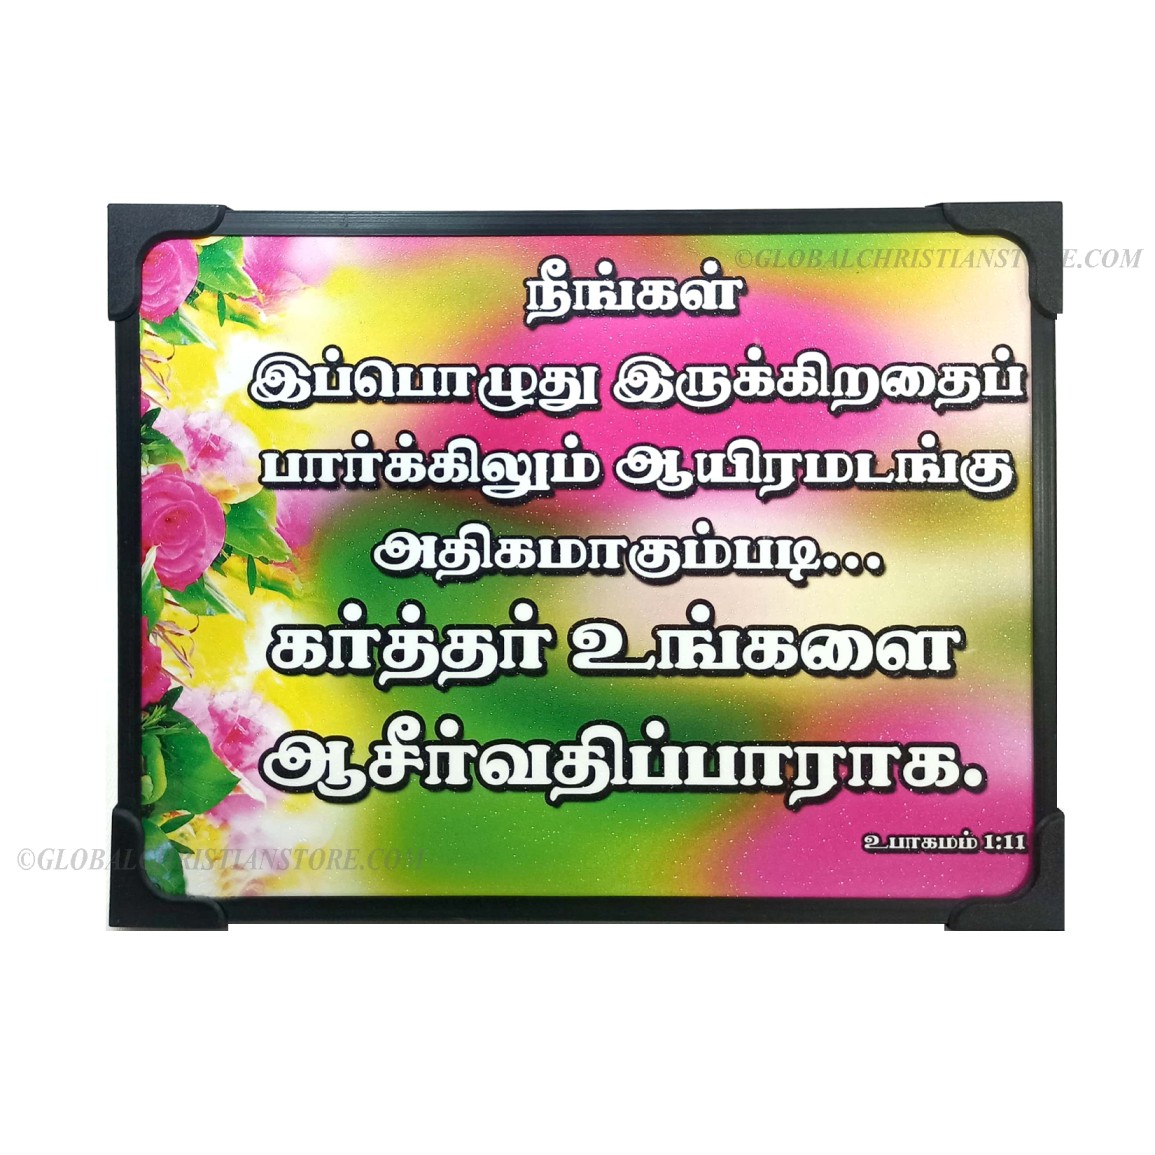 Neengal Ippodhu irukiradhai parkilum Tamil Promise Verse Board (8 ...